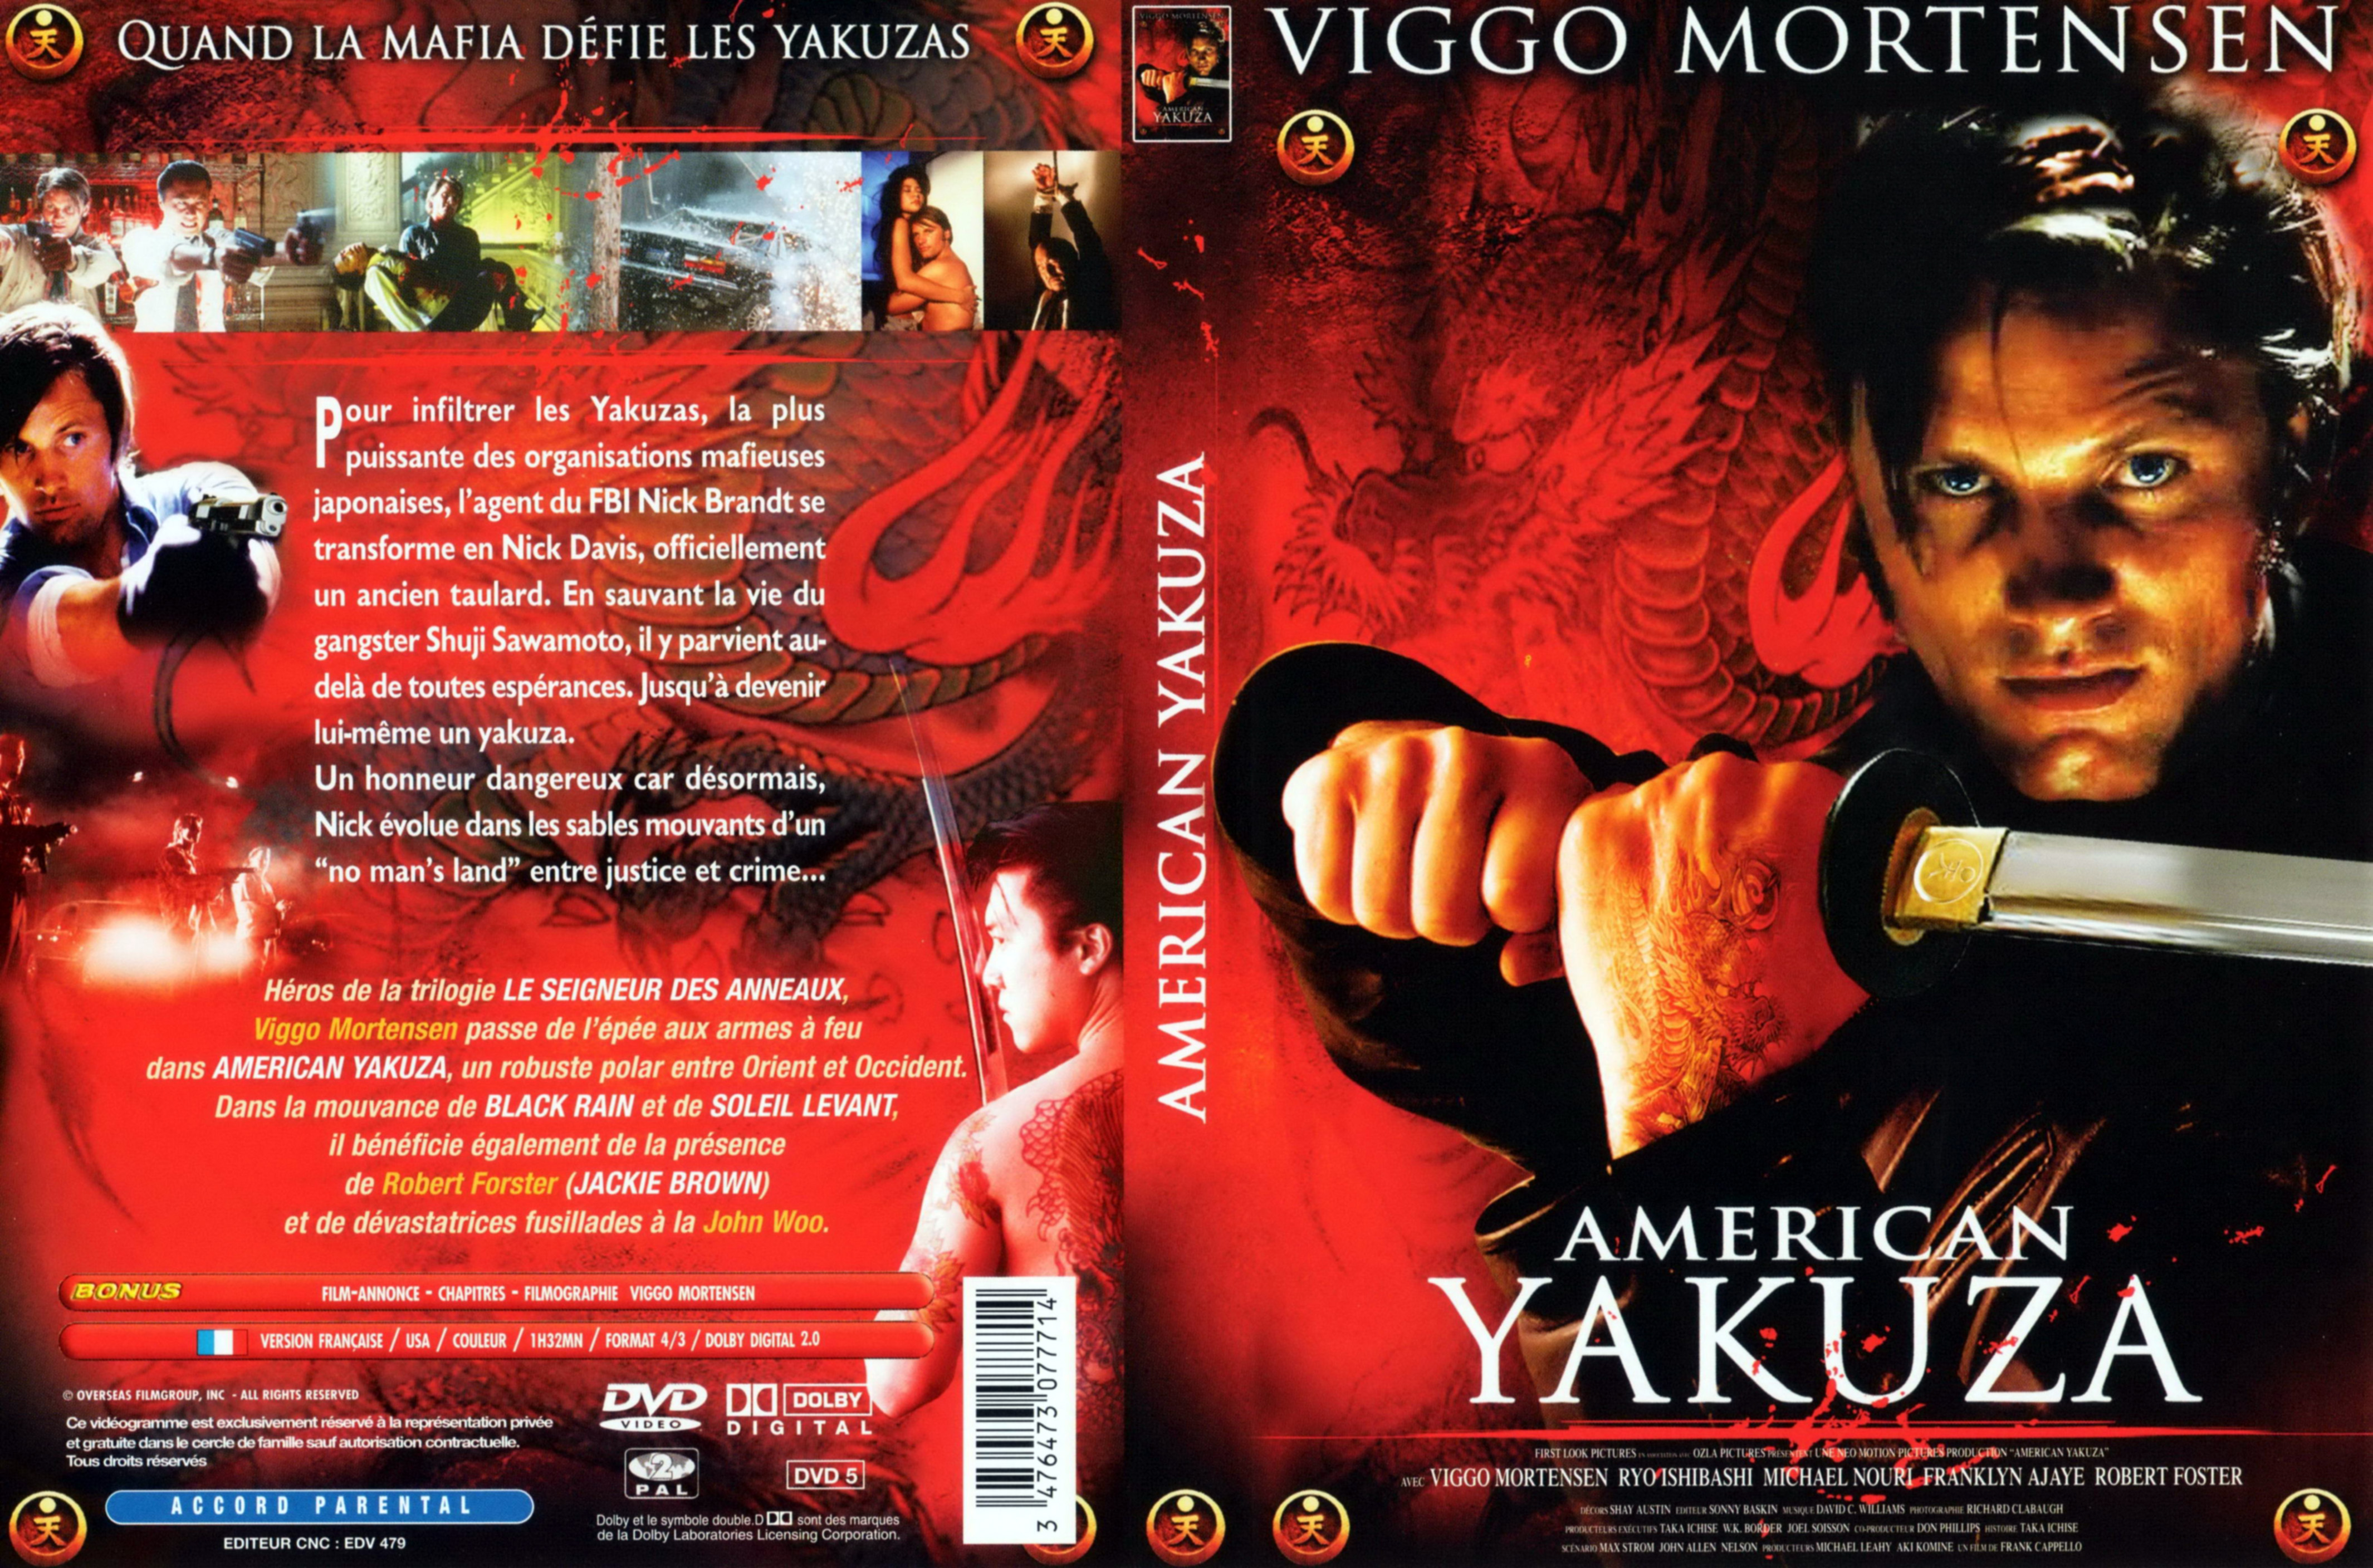 Jaquette DVD American yakuza